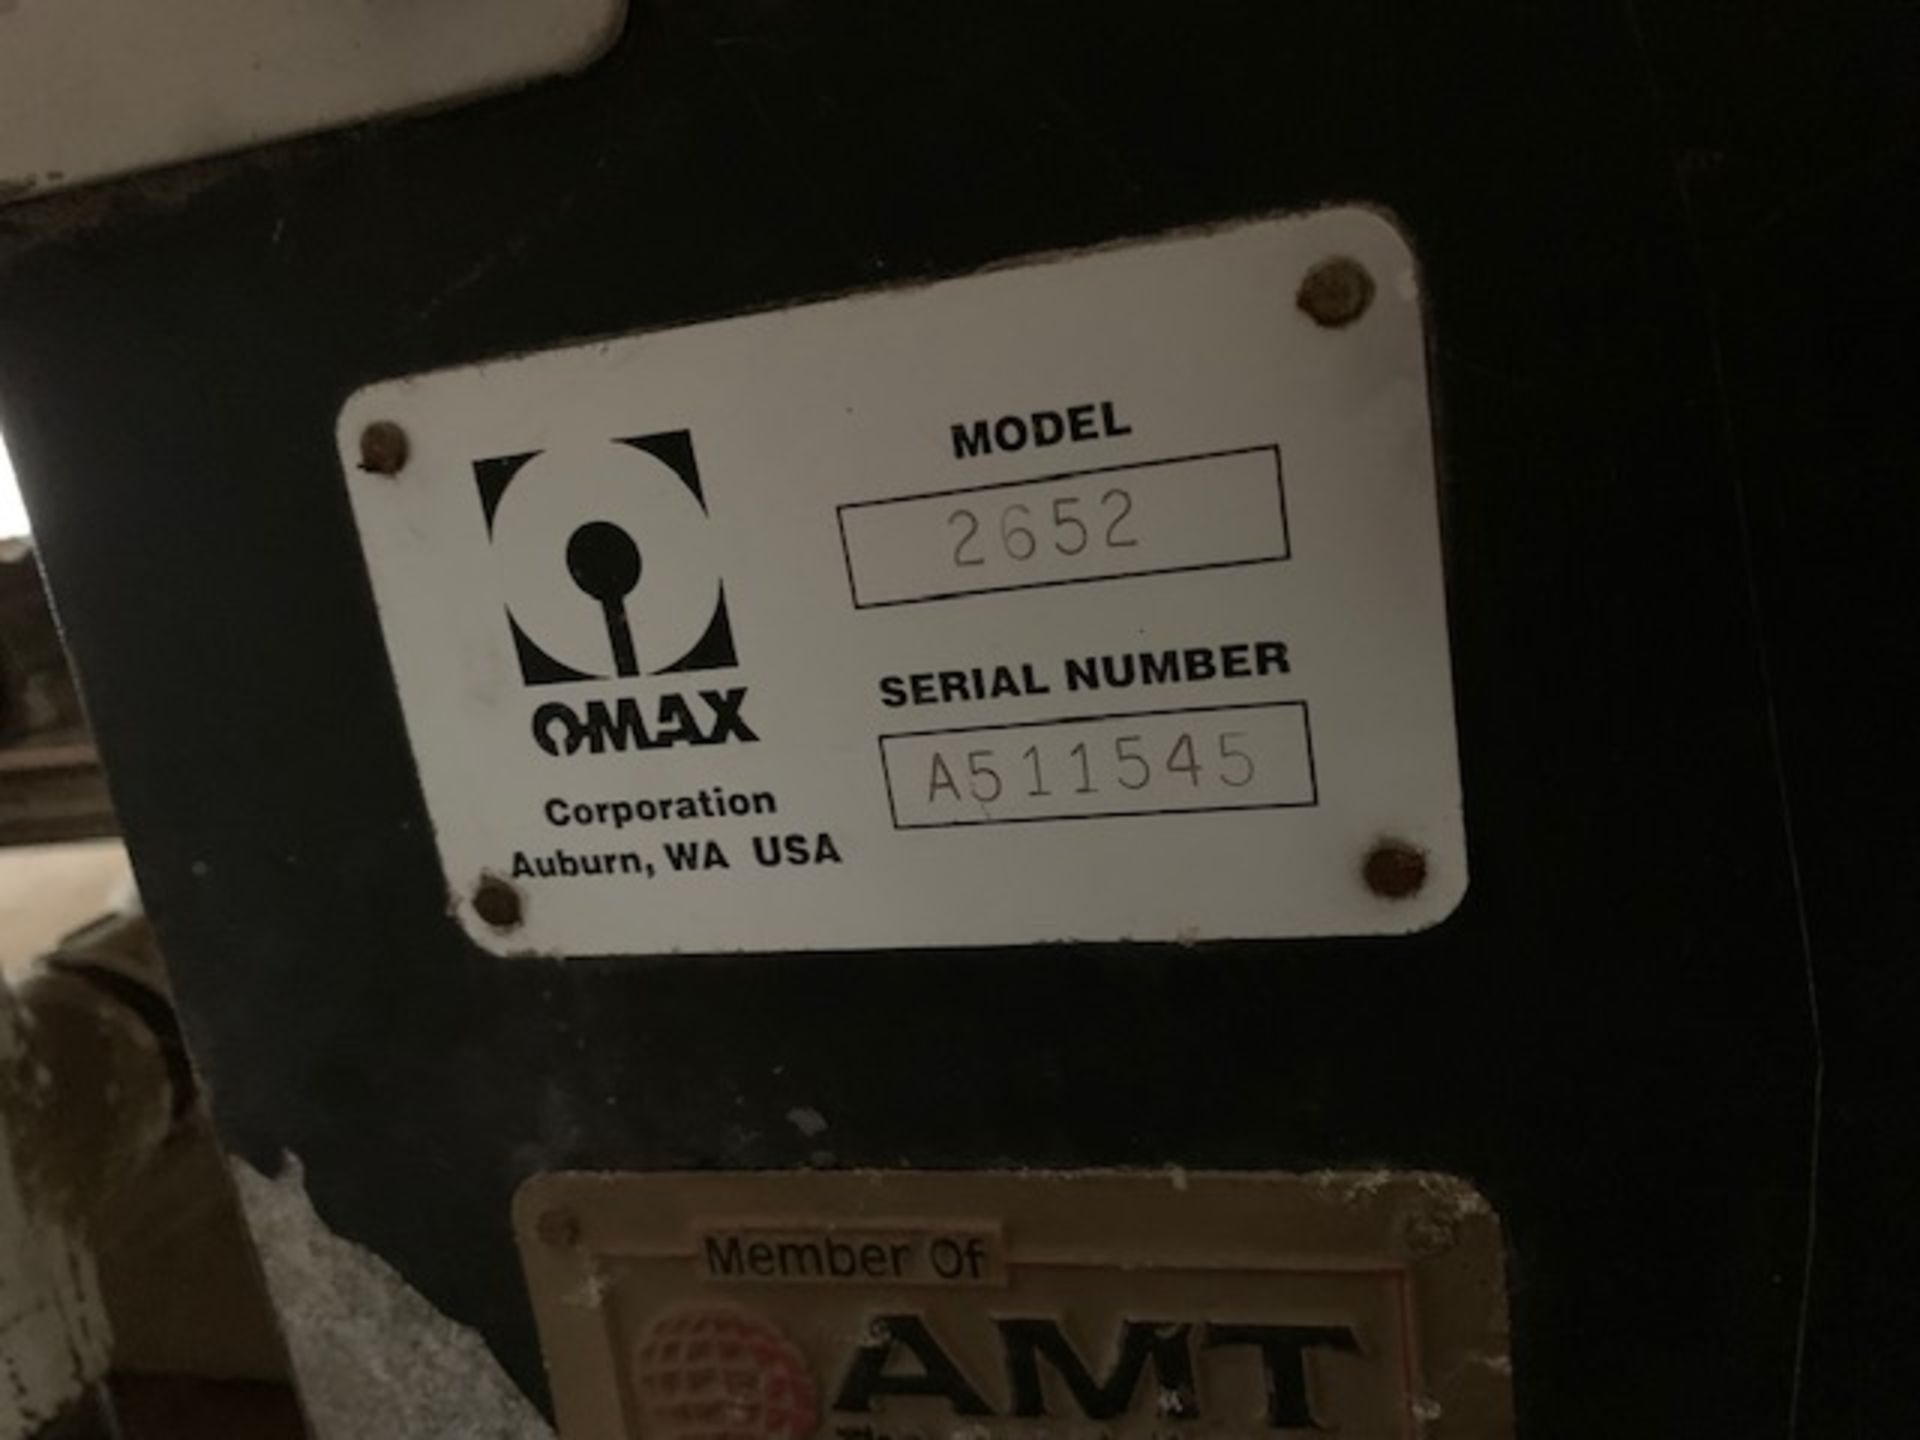 Omax Model 2652 Jet Machining Center Waterjet, SN A511545 - Image 12 of 12